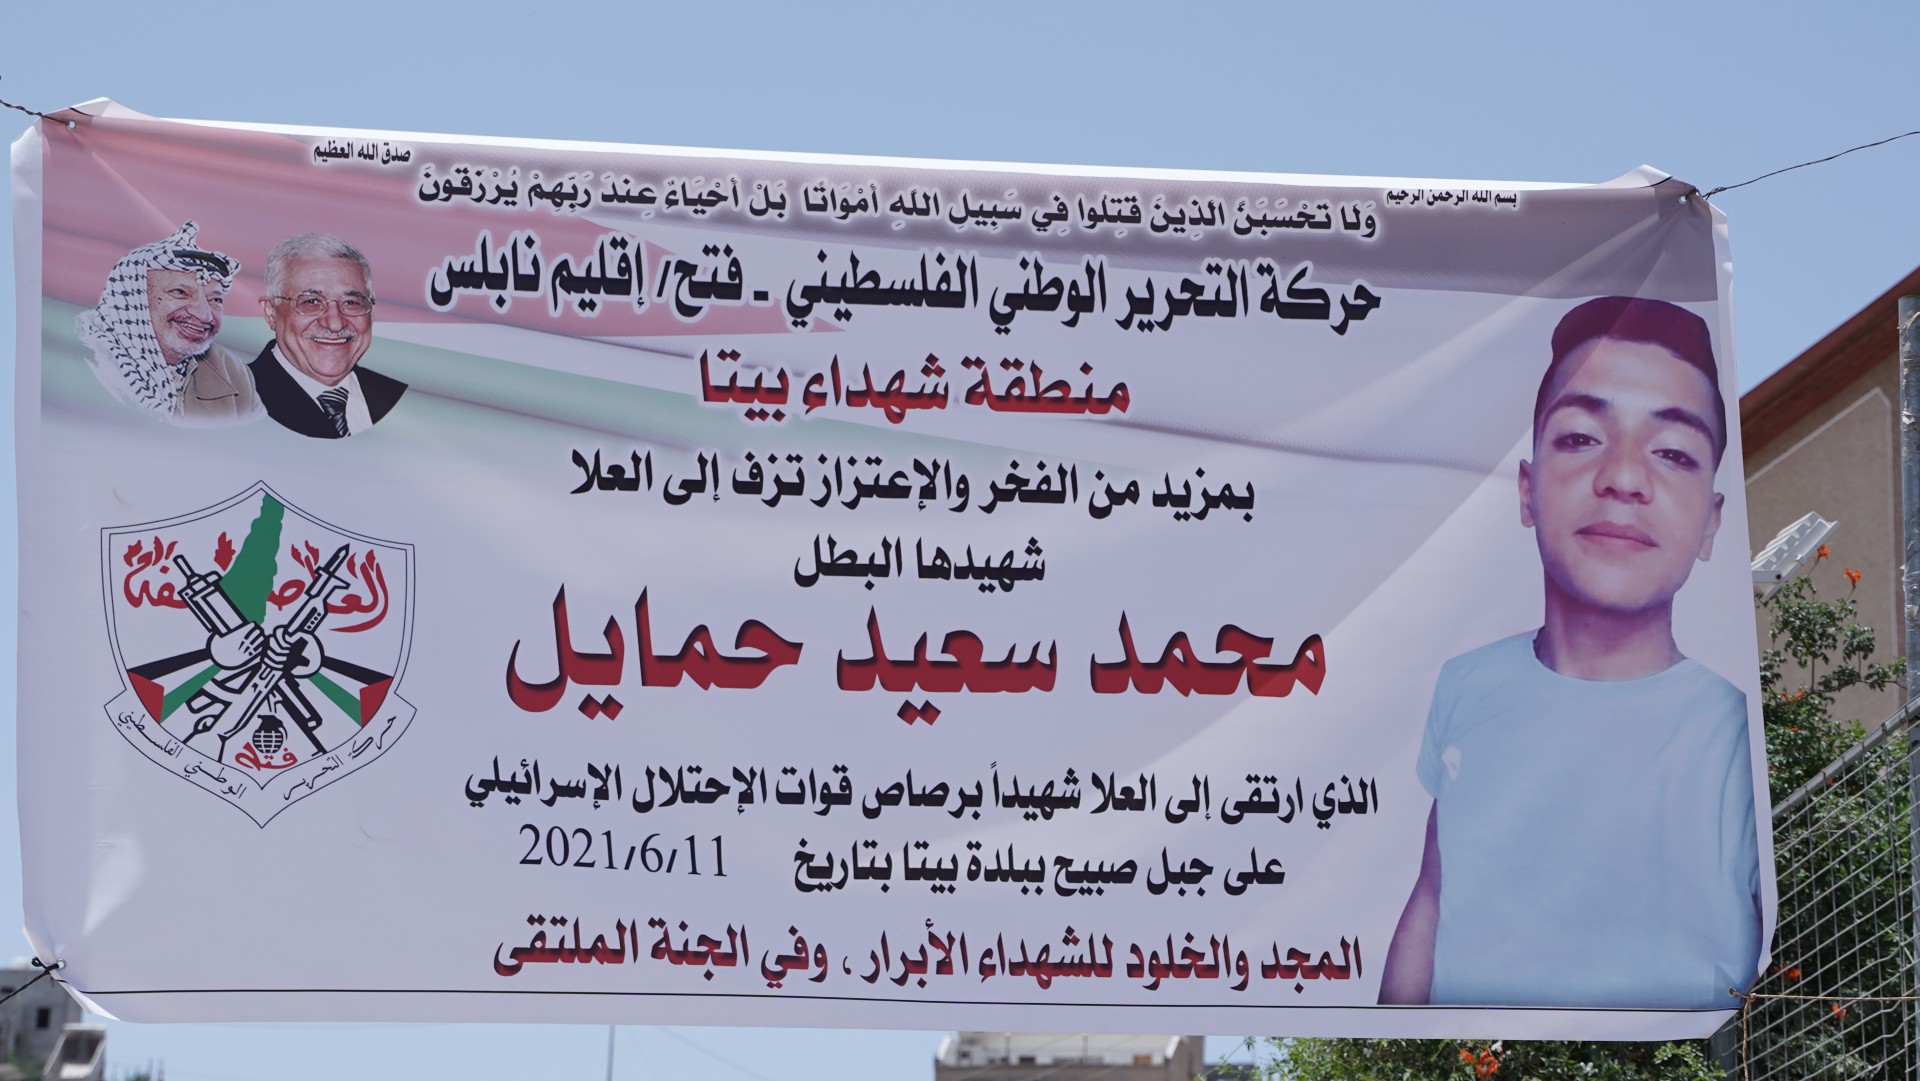 A banner showing slain 15-year-old Mohammed Hamayel in Beita (MEE/Akram al-Waara)